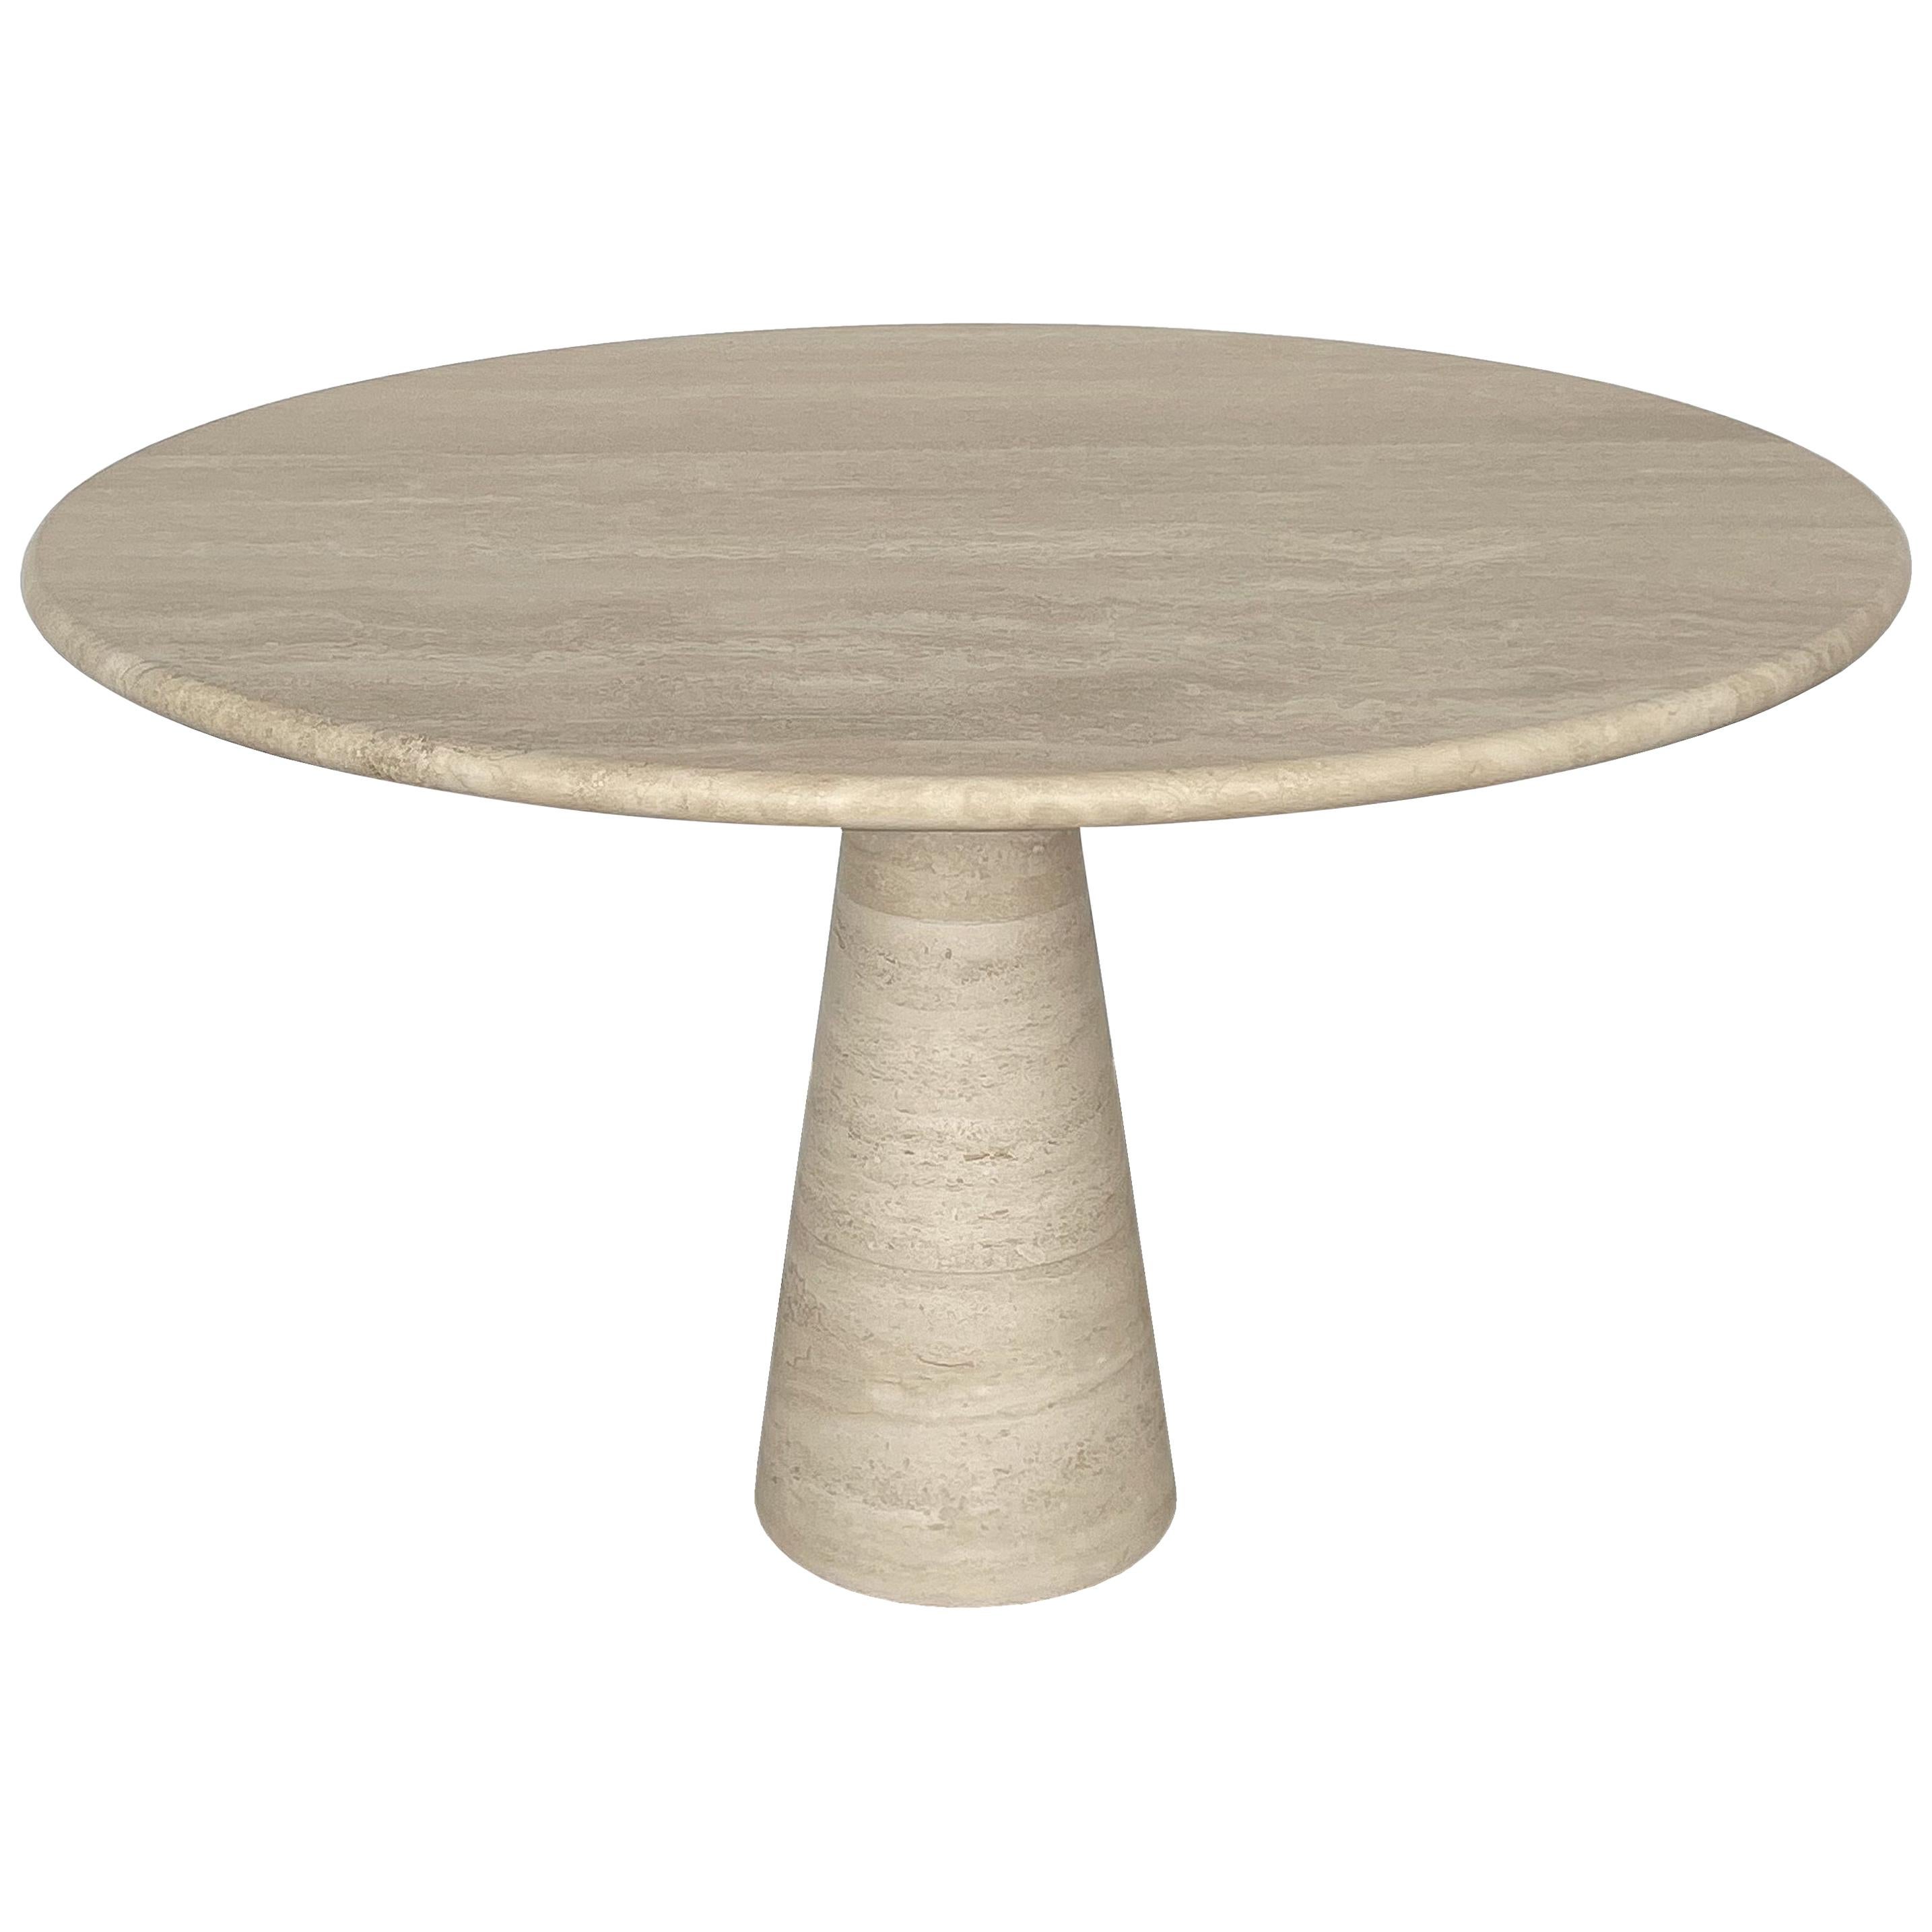 Angelo Mangiarotti Style Round Travertine Pedestal Dining Table